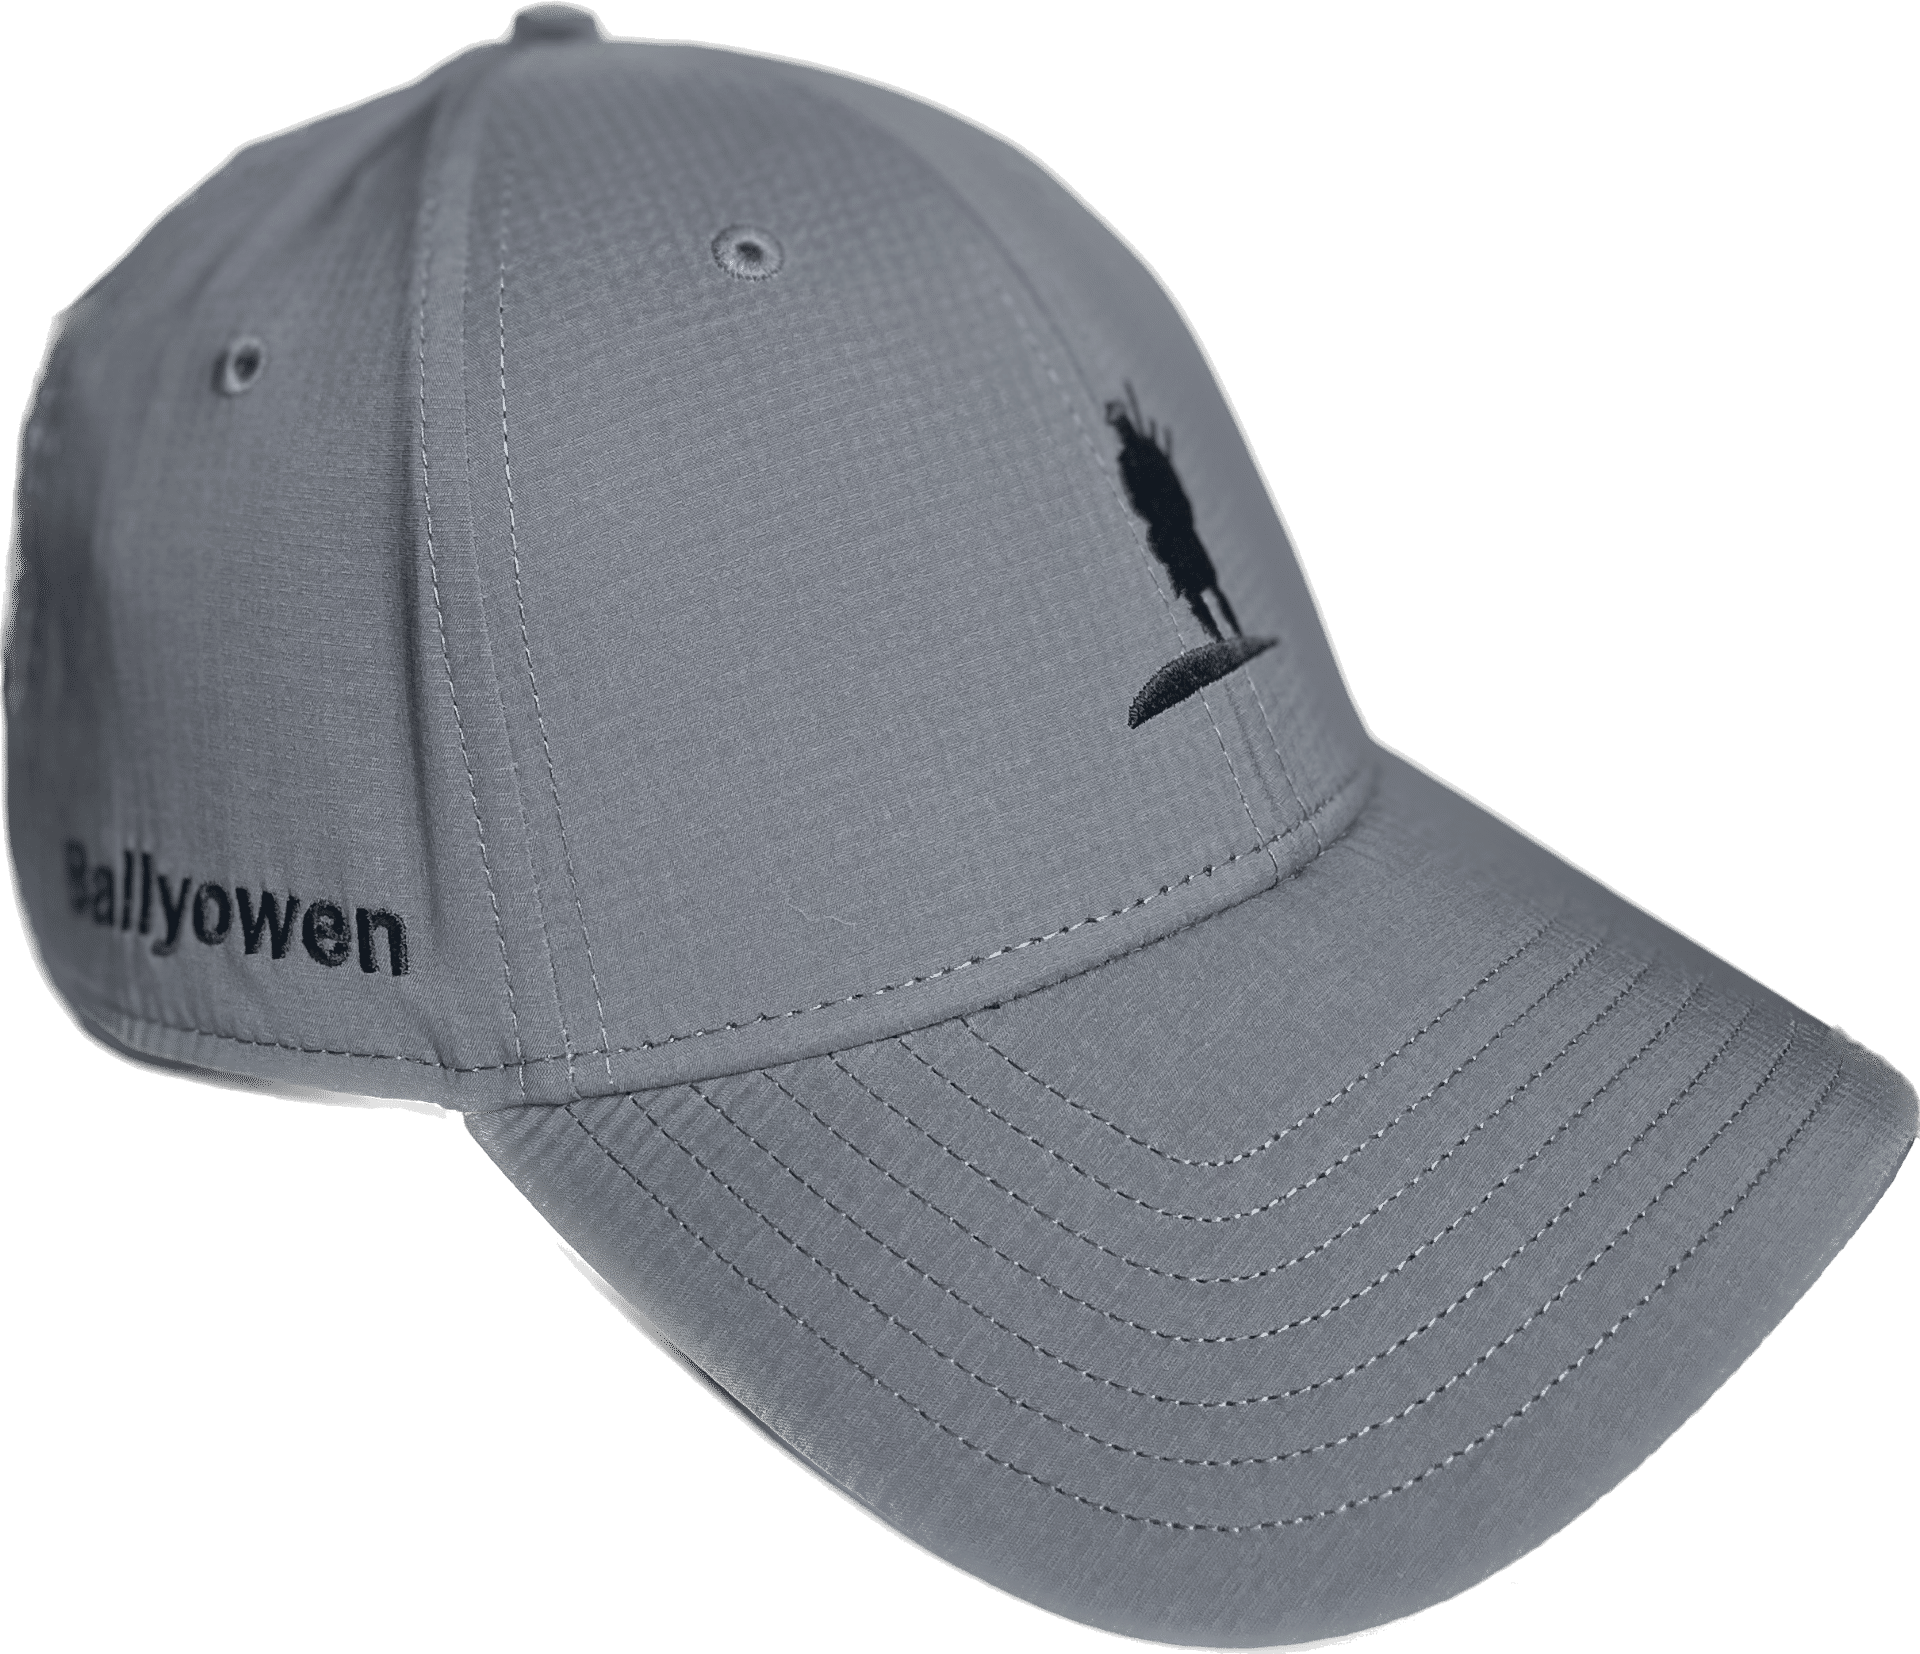 Ballyowen Hat